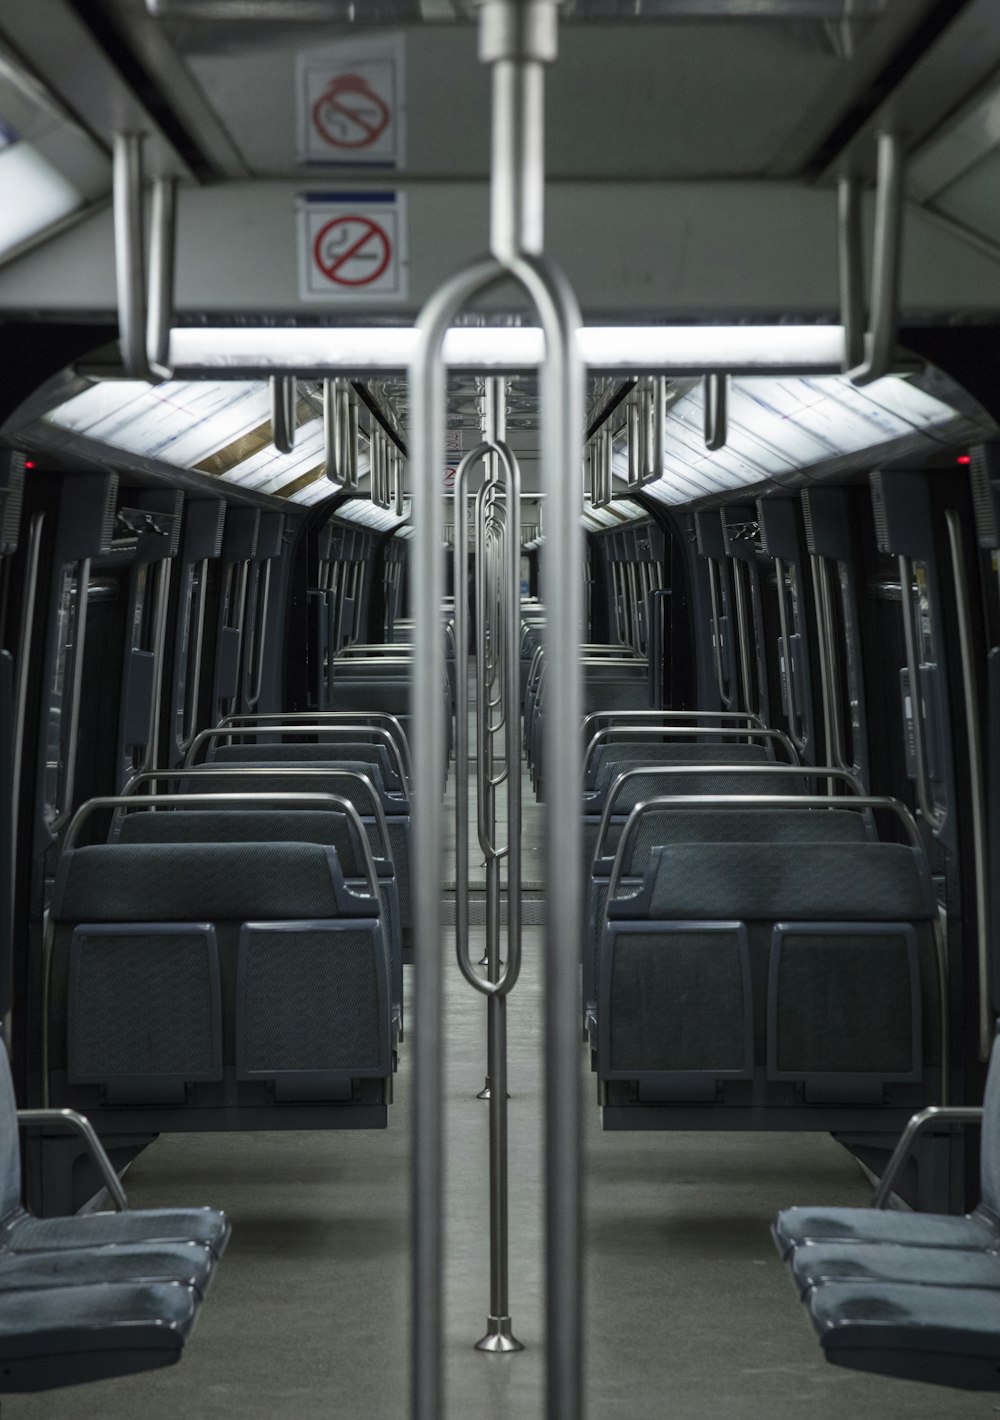 gray and black train interior set